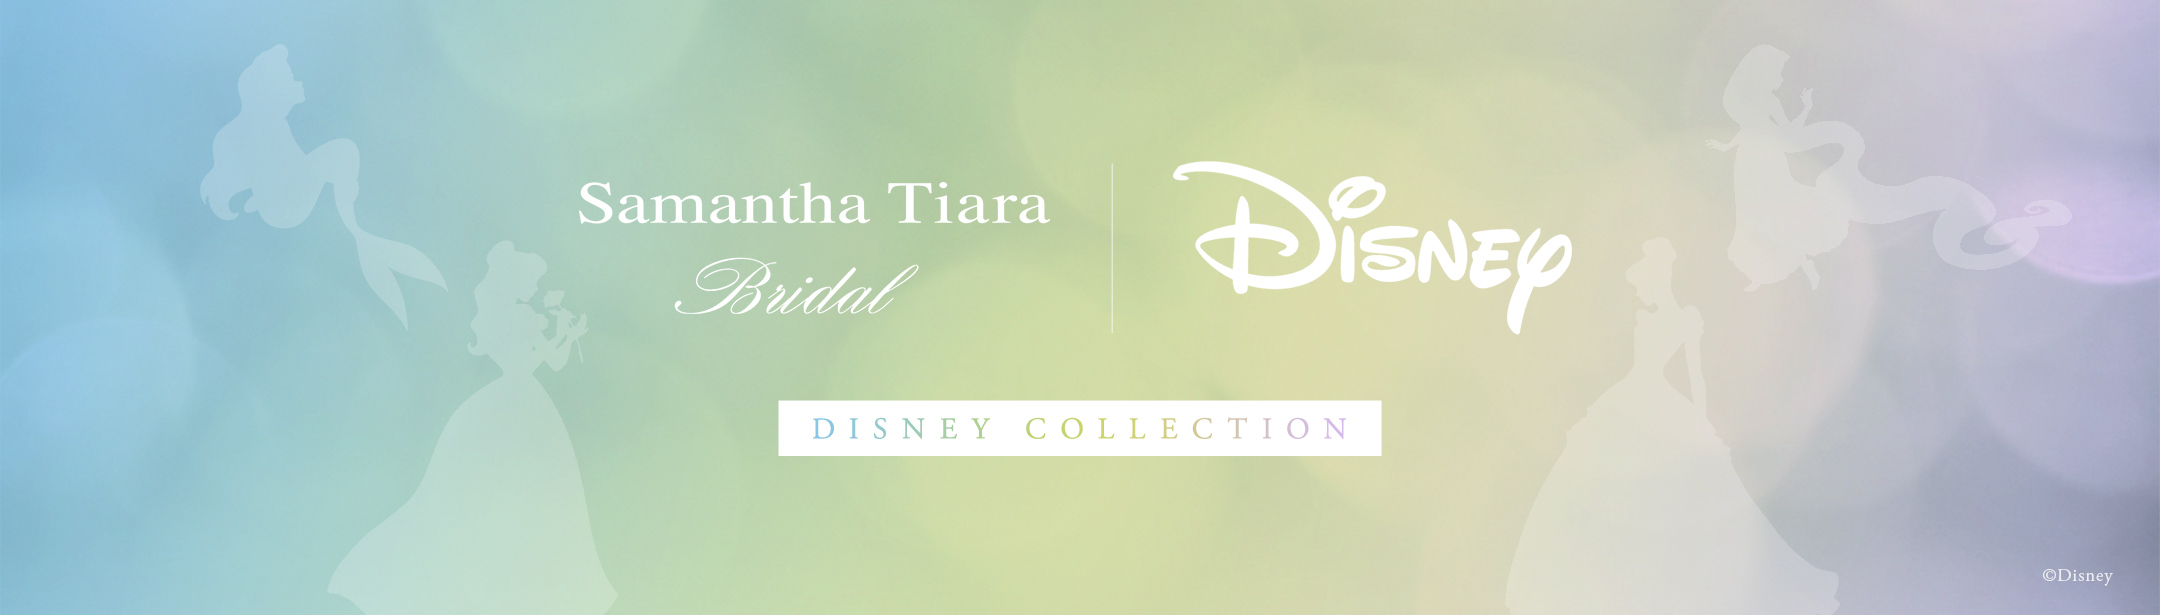 Samantha Tiara Bridal Disney DISNEY COLLECTION